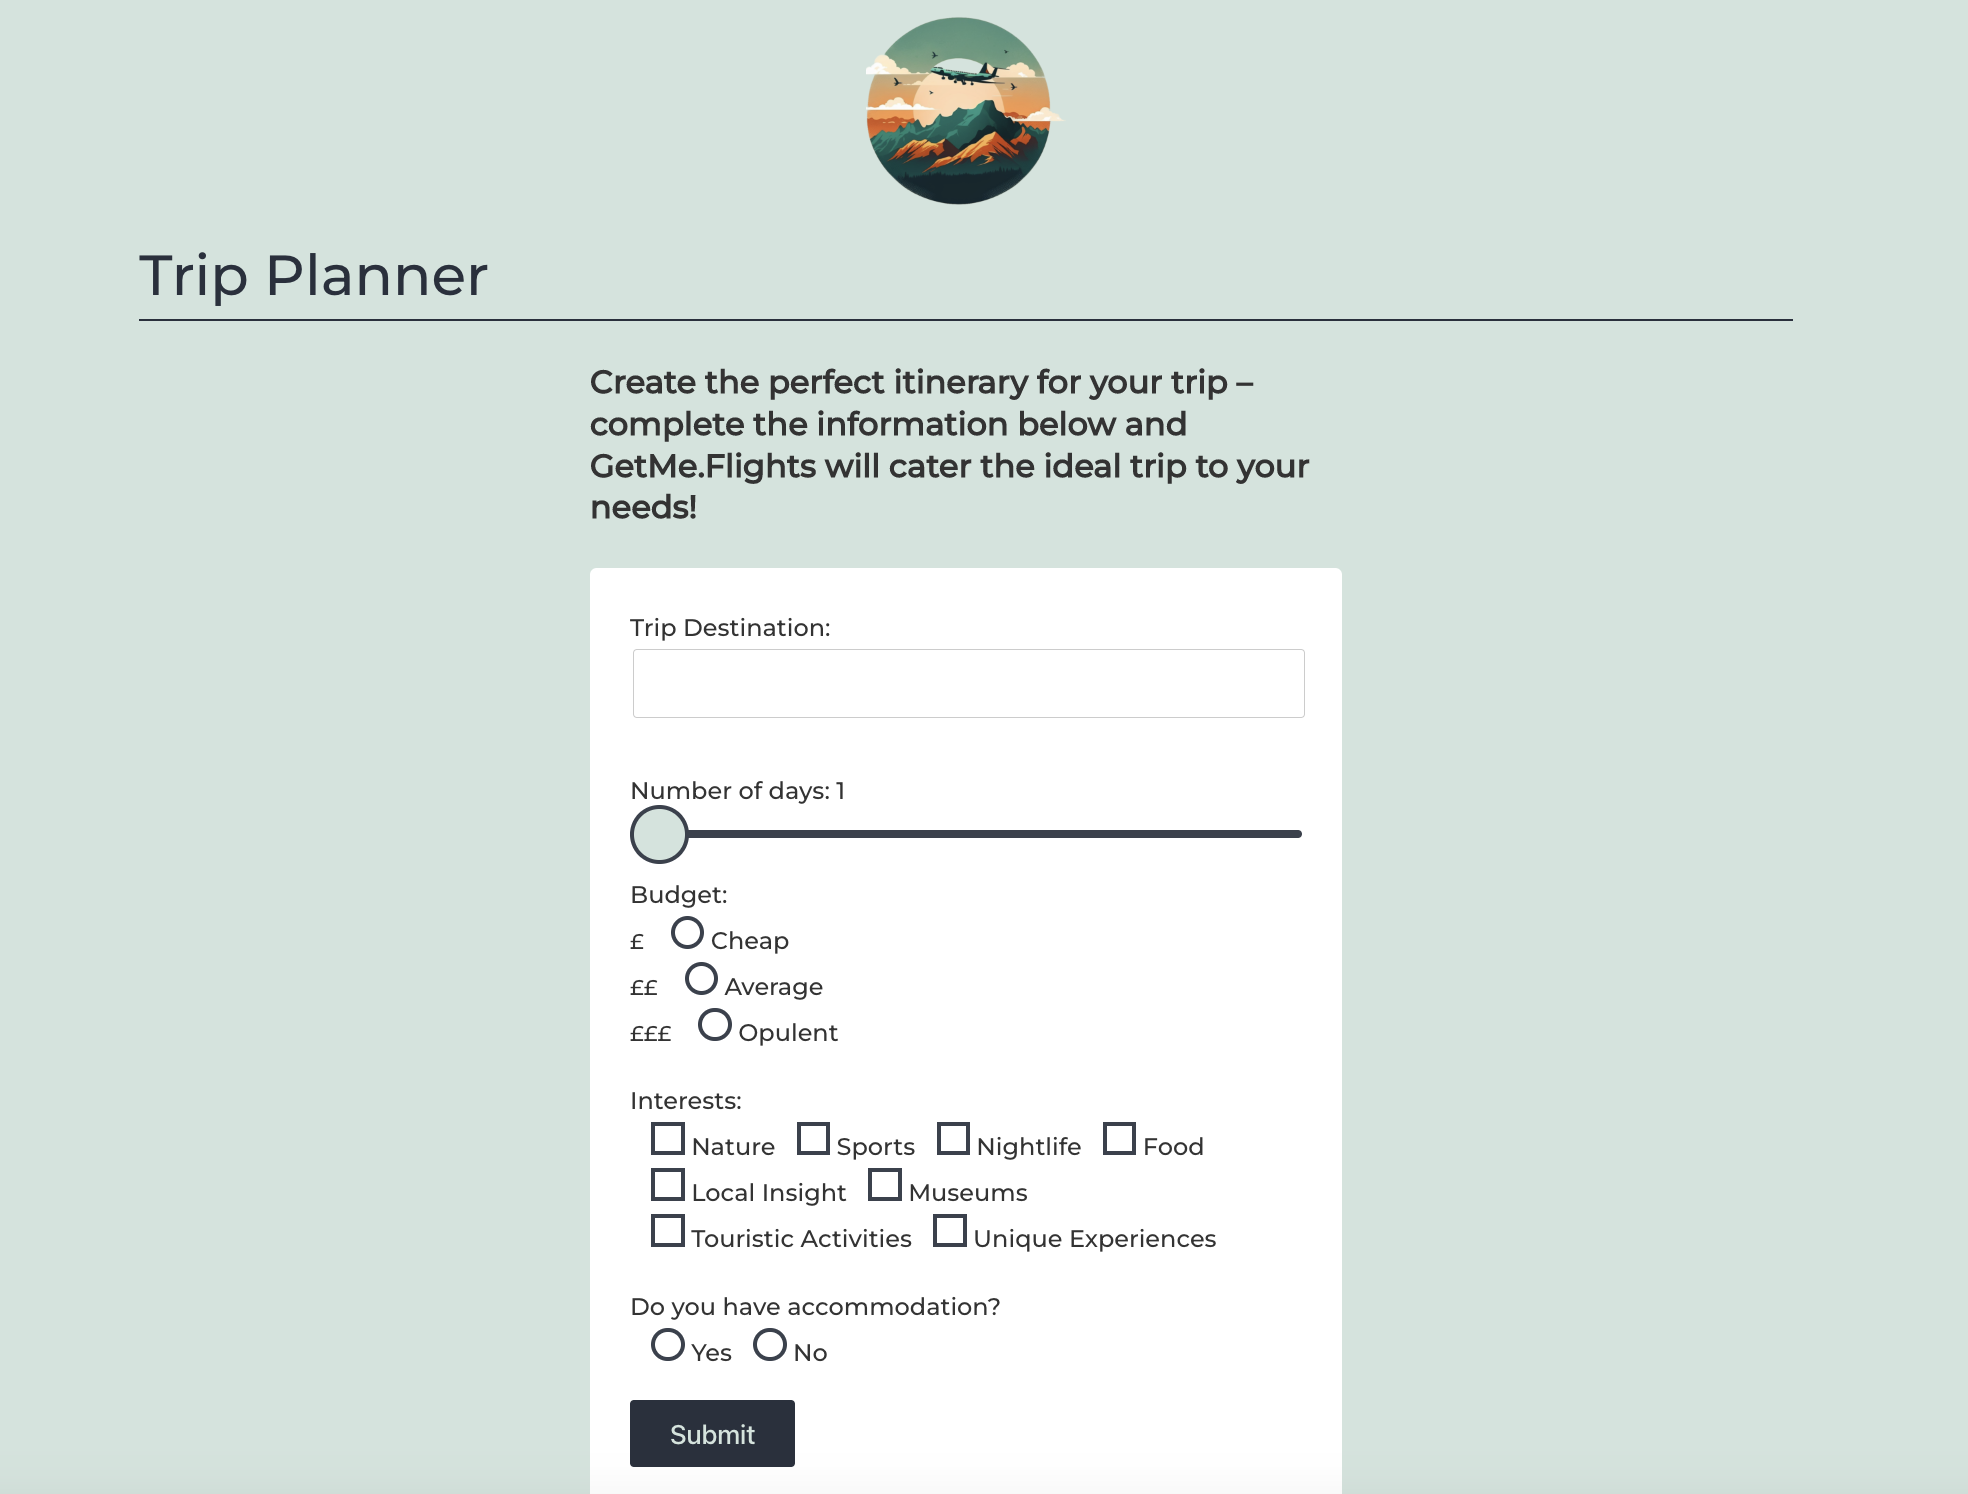 GetMe.Flights - Trip Planner - AI Tool Details